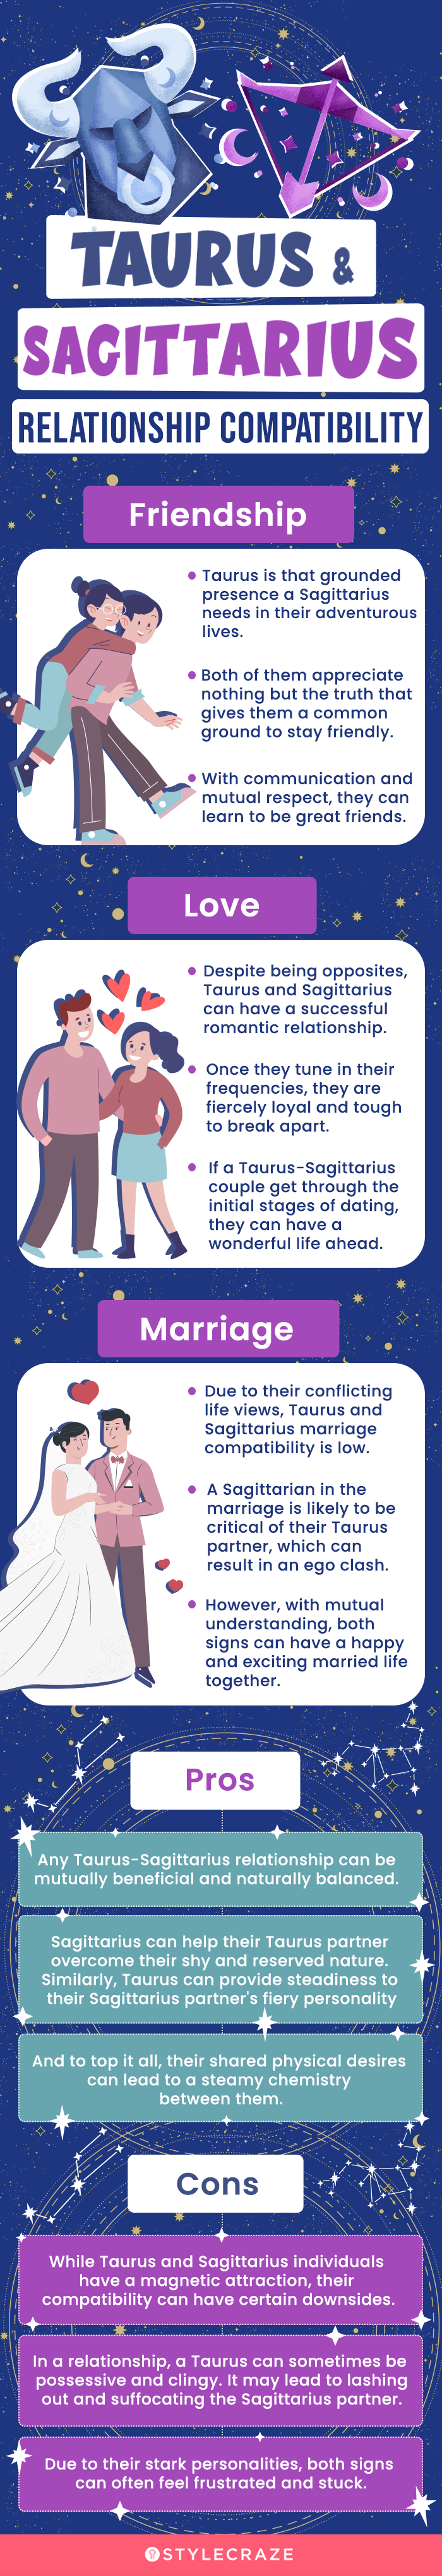 taurus and sagittarius relationship compatibility (infographic)